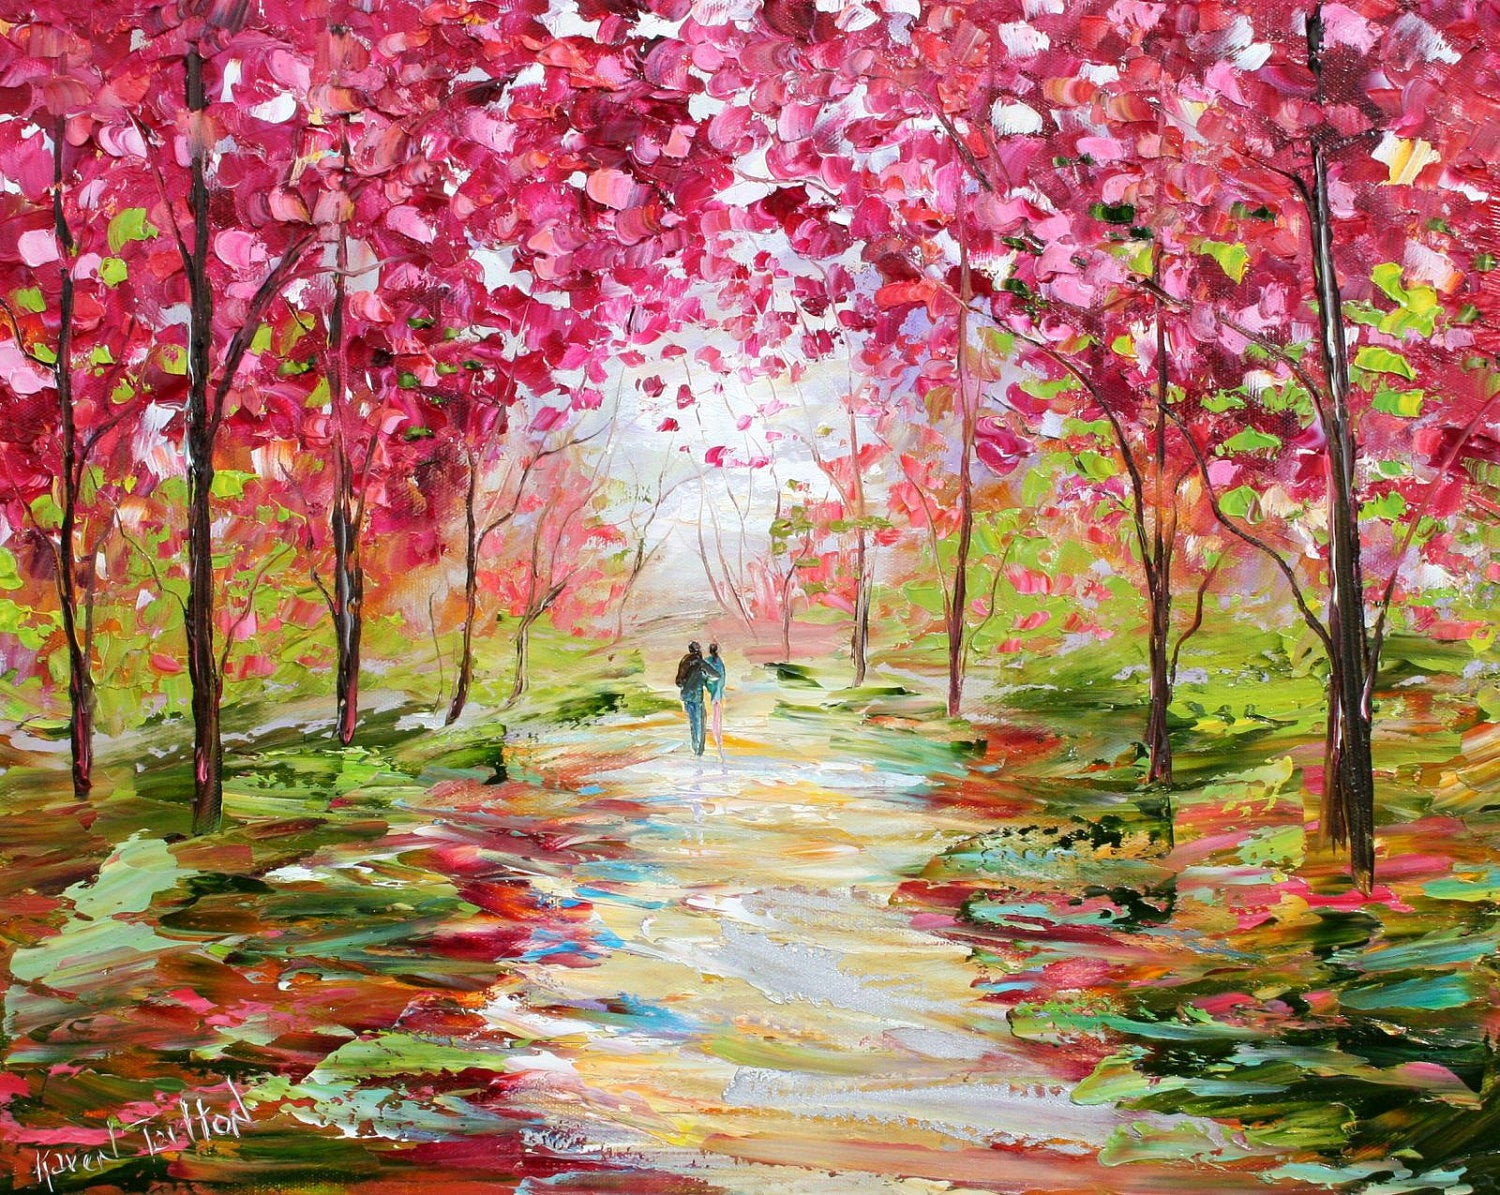 Best ideas about Spring Painting Ideas
. Save or Pin Karen Tarlton Original oil painting Spring Romance impasto Now.